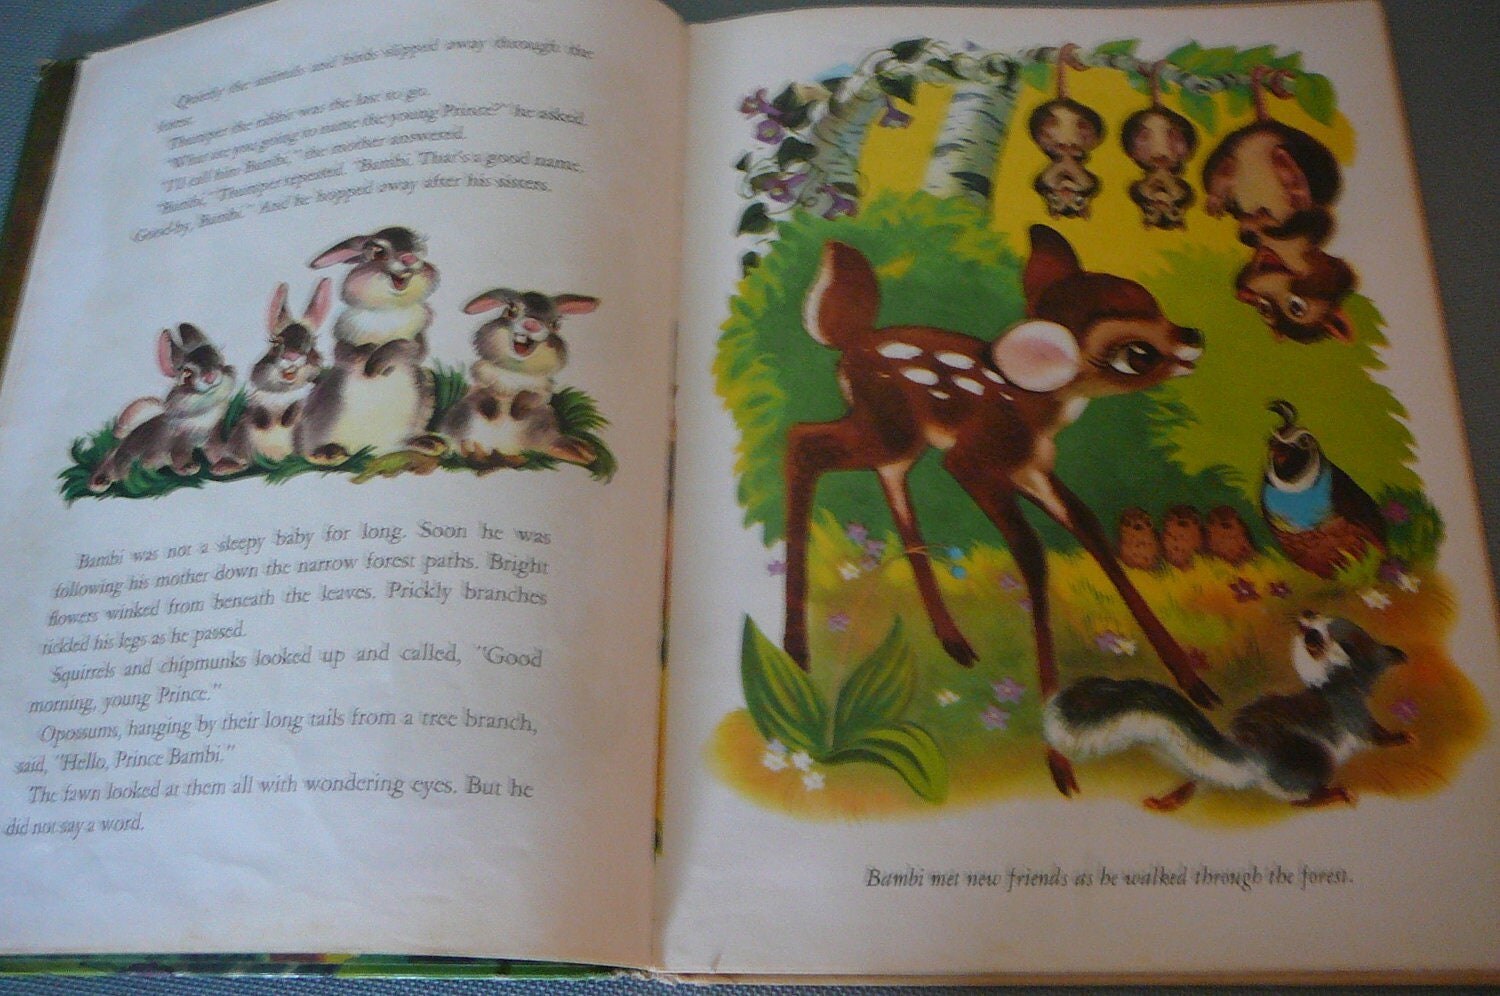 Bambi 1966 A big golden book